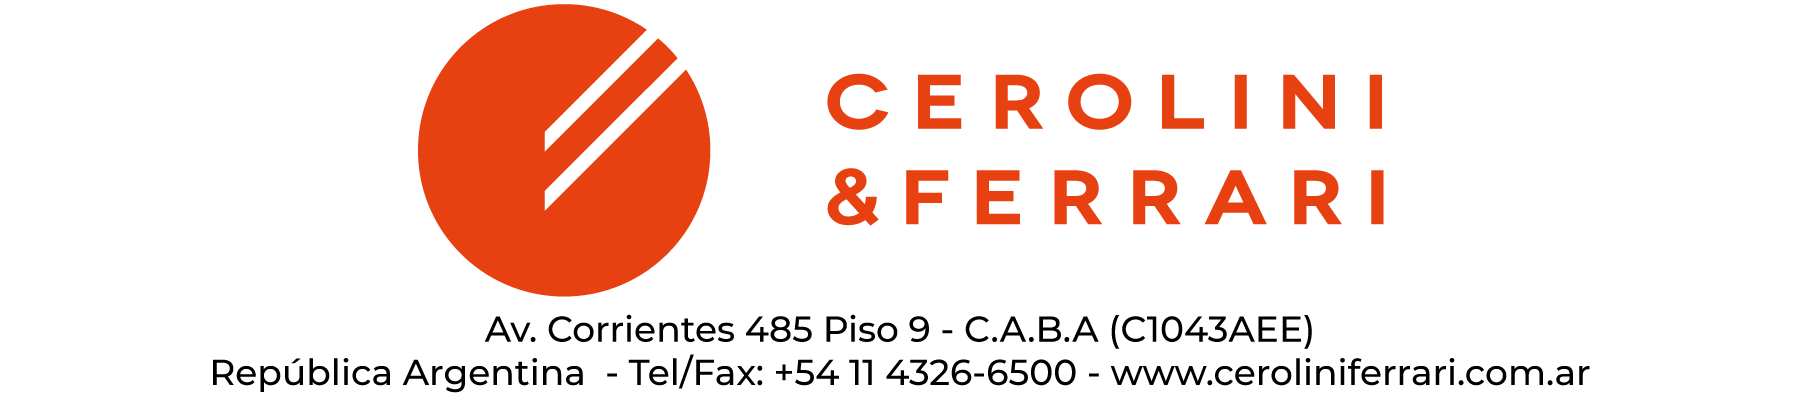 Cerolini & Ferrari